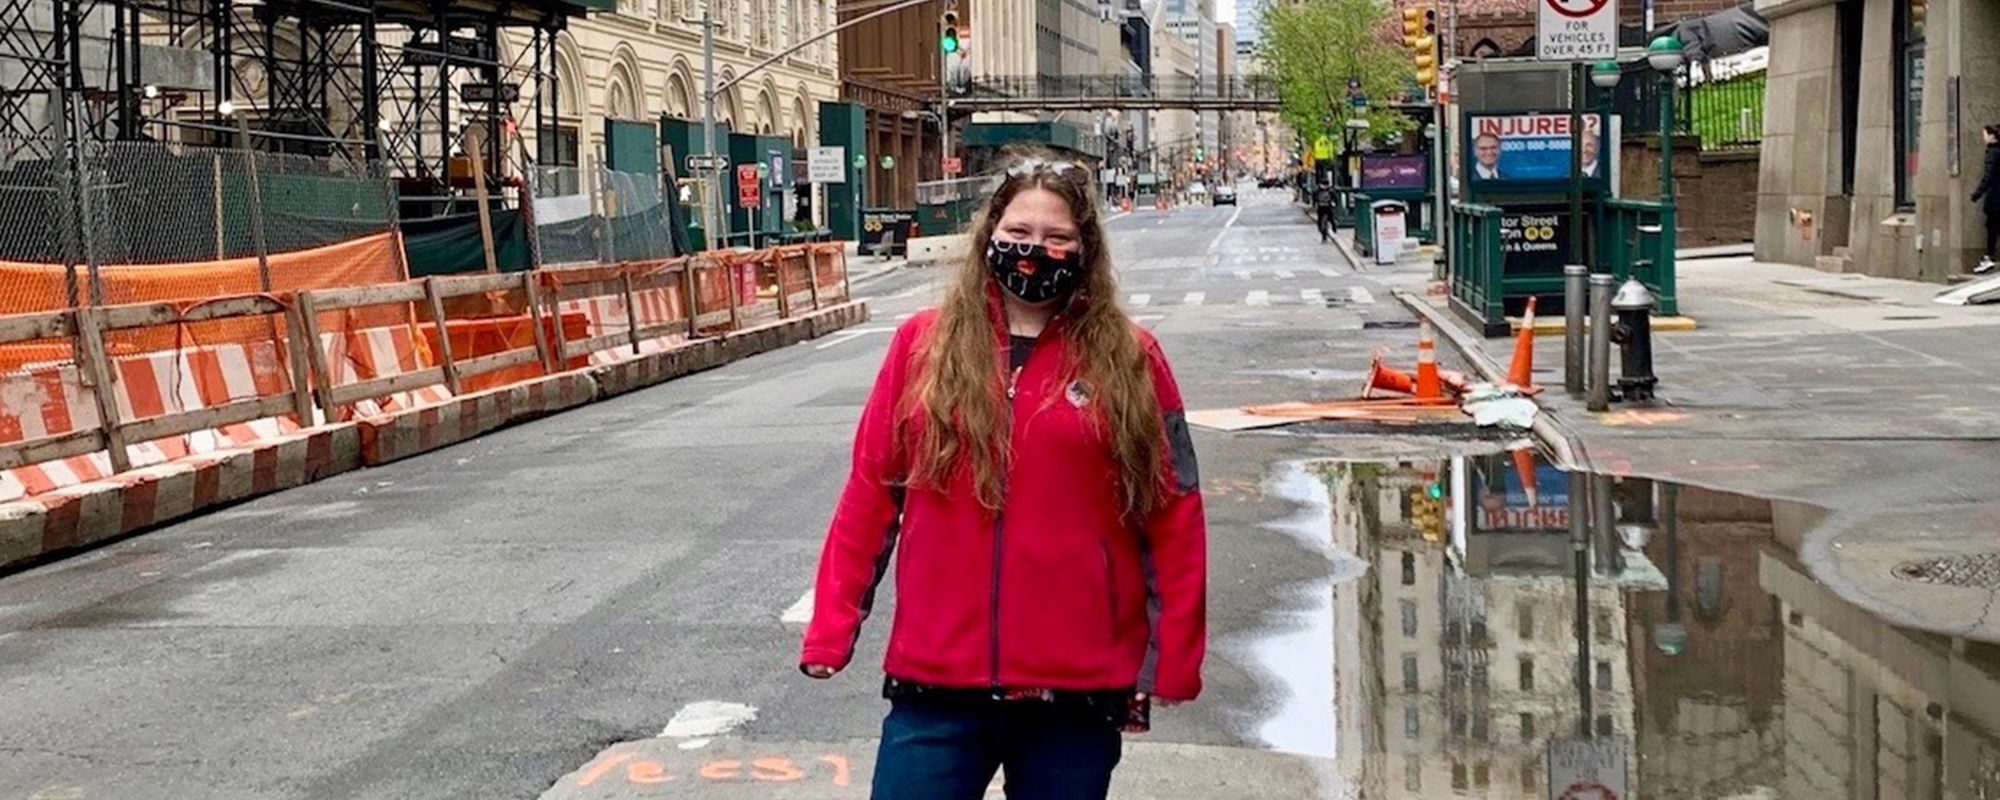 Sarah Sullivan poses in empty new york city street